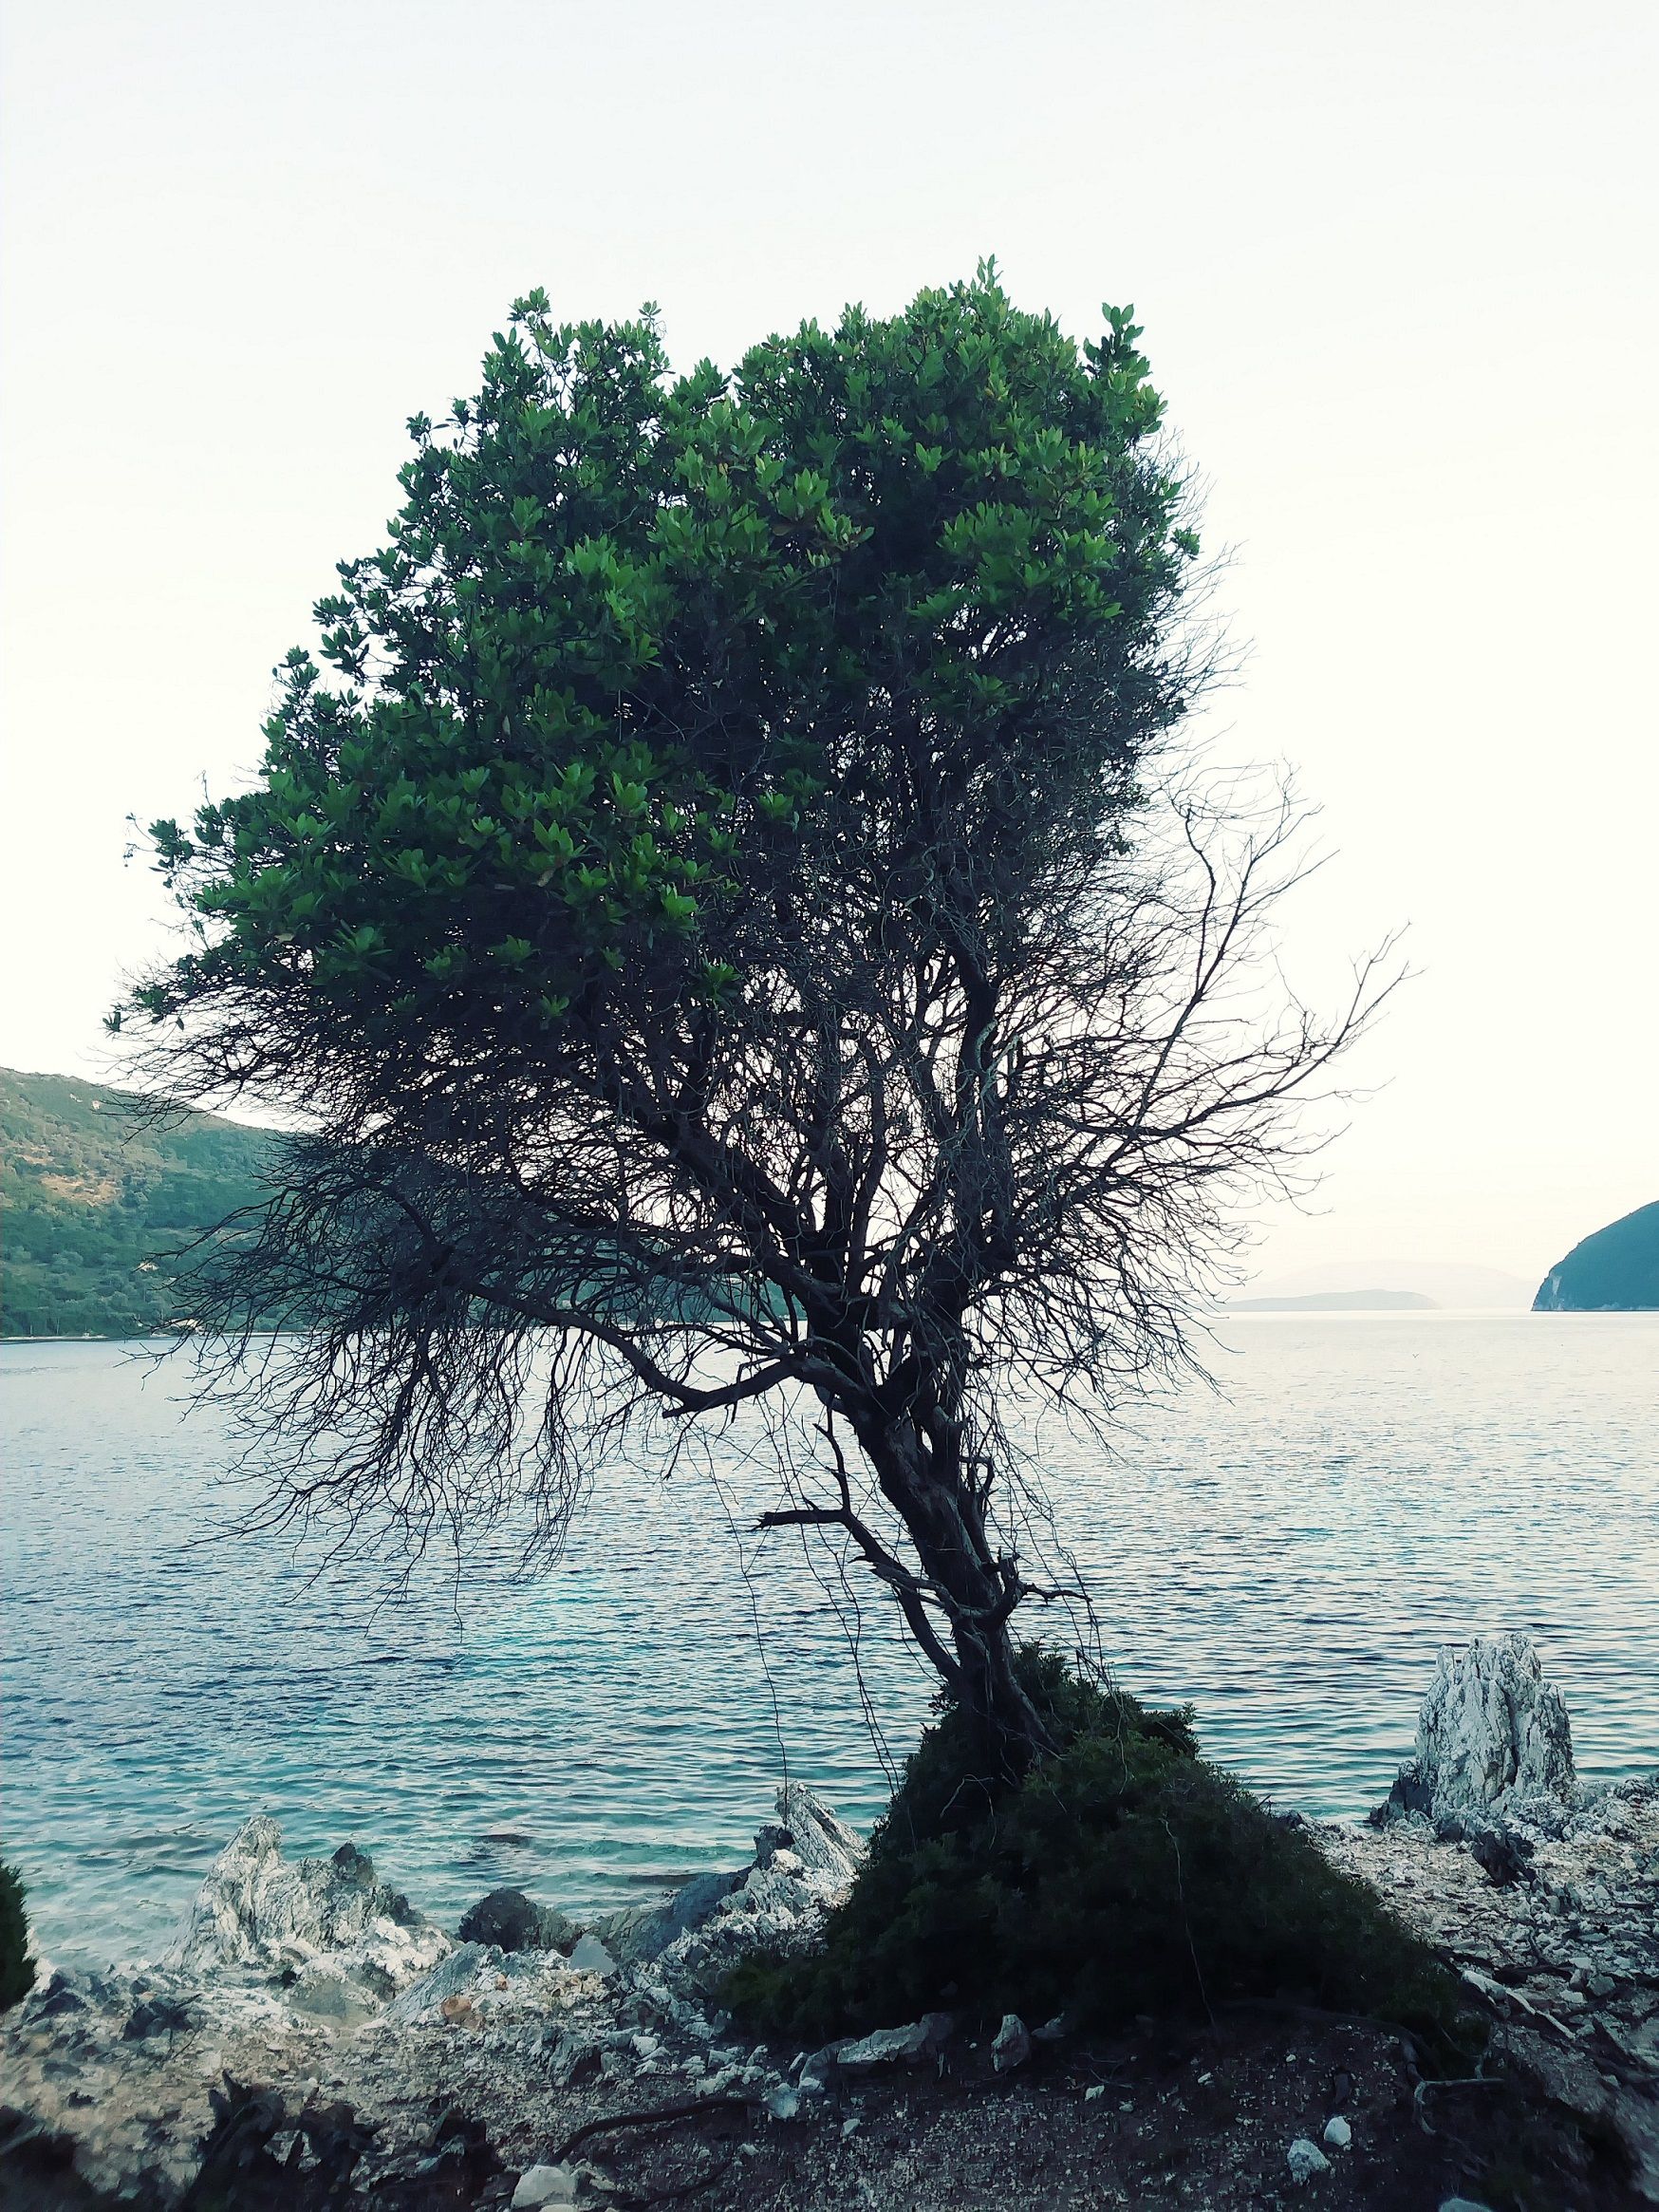 A tree on Thillia Island, Greece